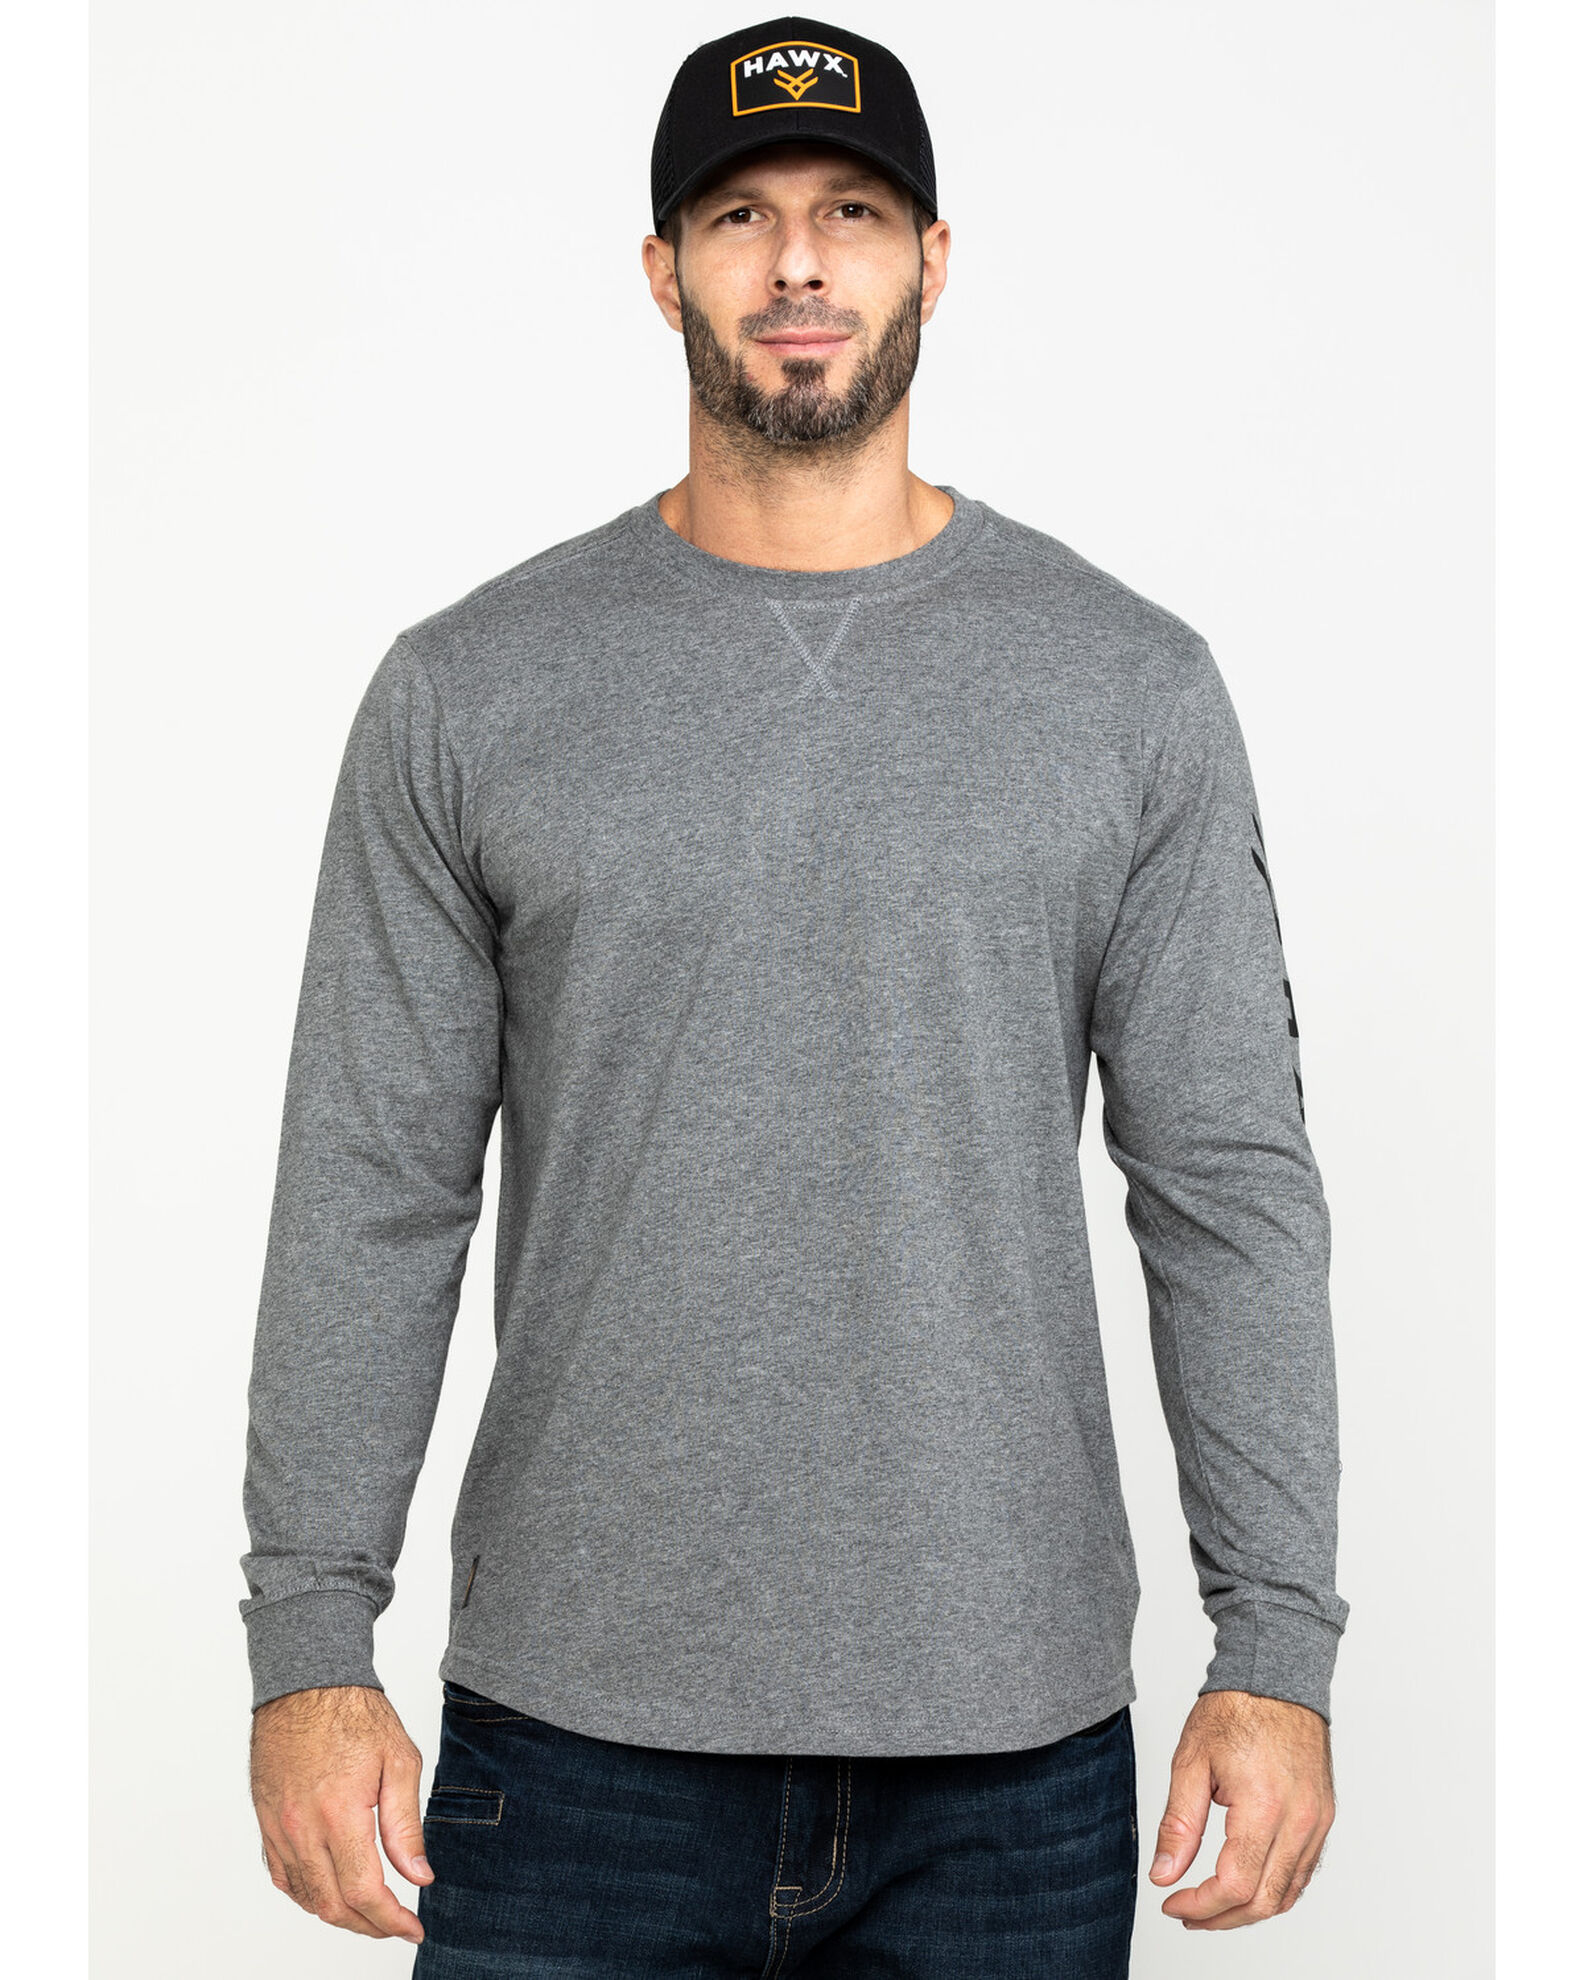 Hawx Men's Big Logo Long Sleeve T-Shirt - Big | Sheplers